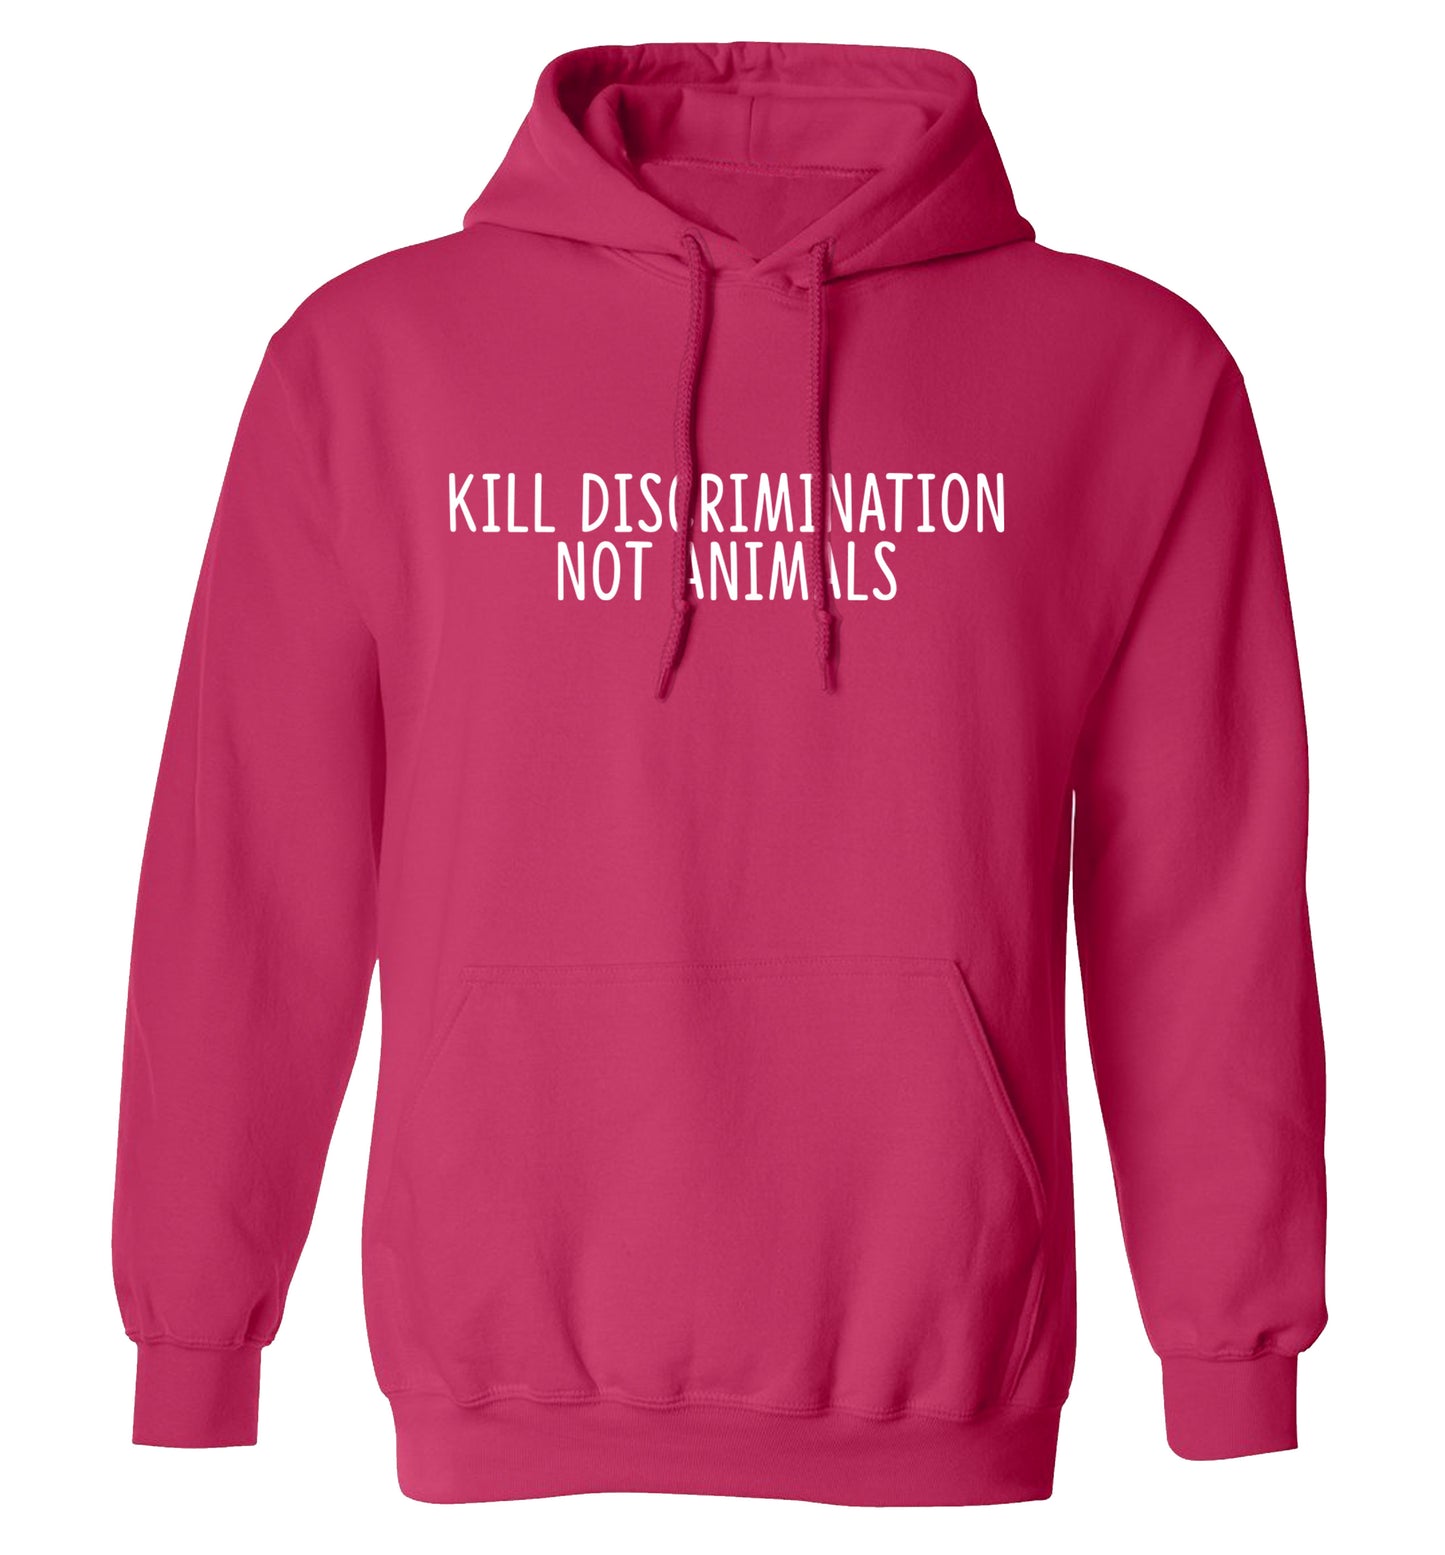 Kill Discrimination Not Animals adults unisex pink hoodie 2XL